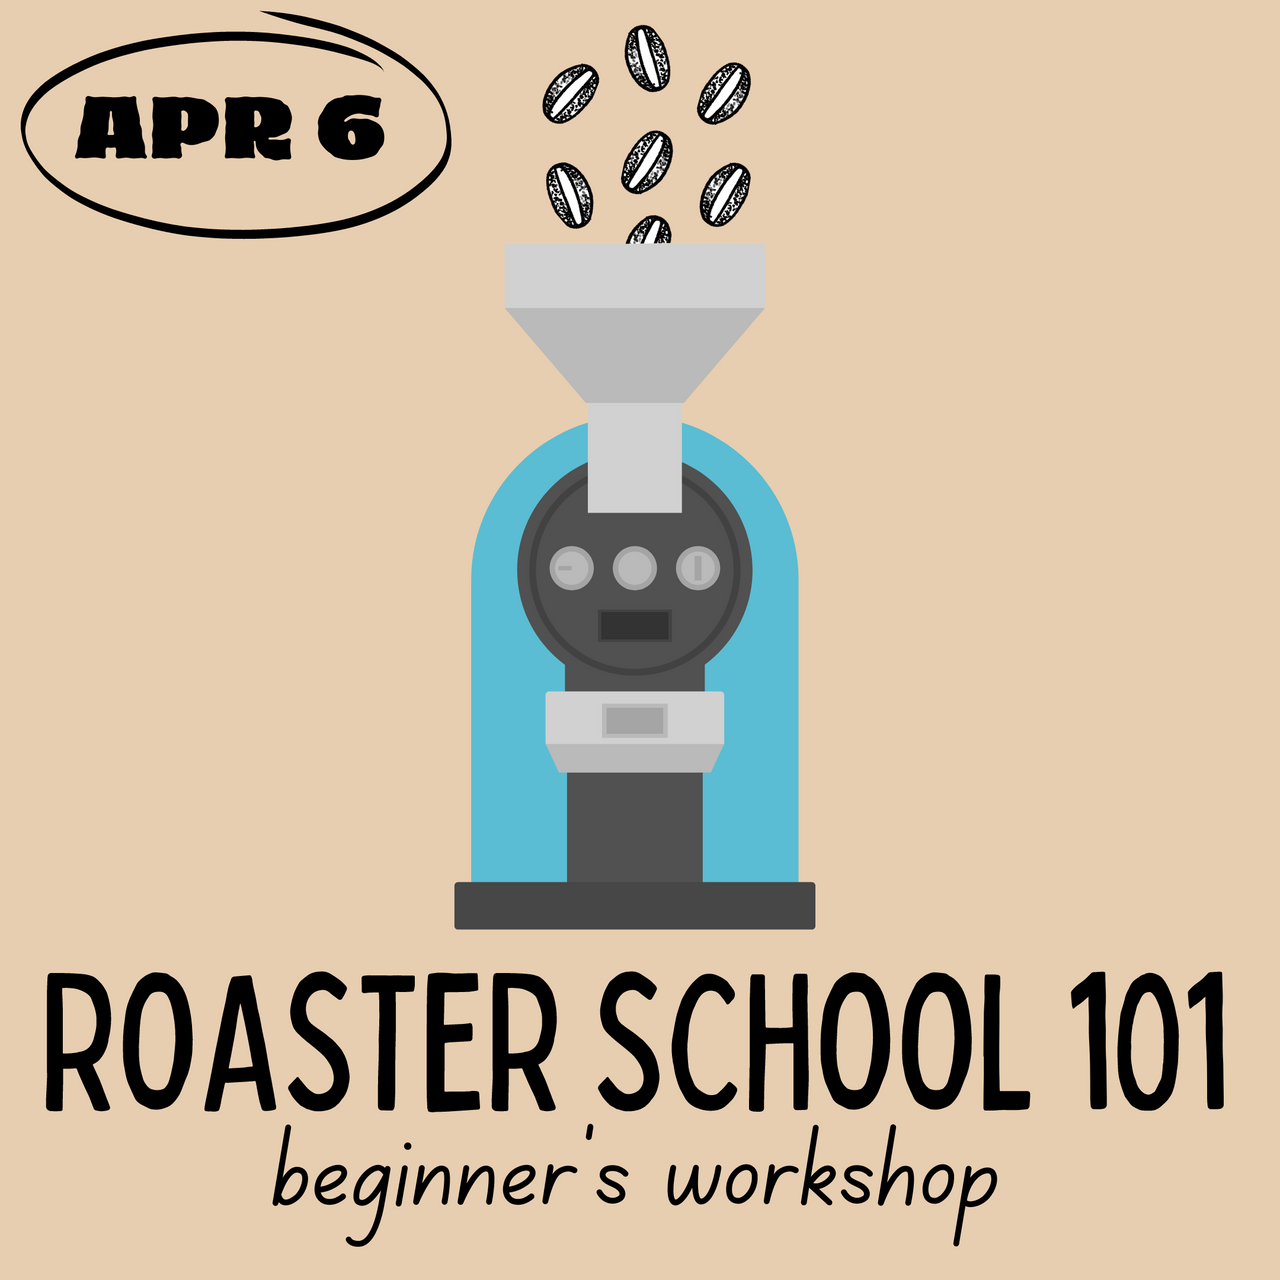 Roaster School 101 - April 6th